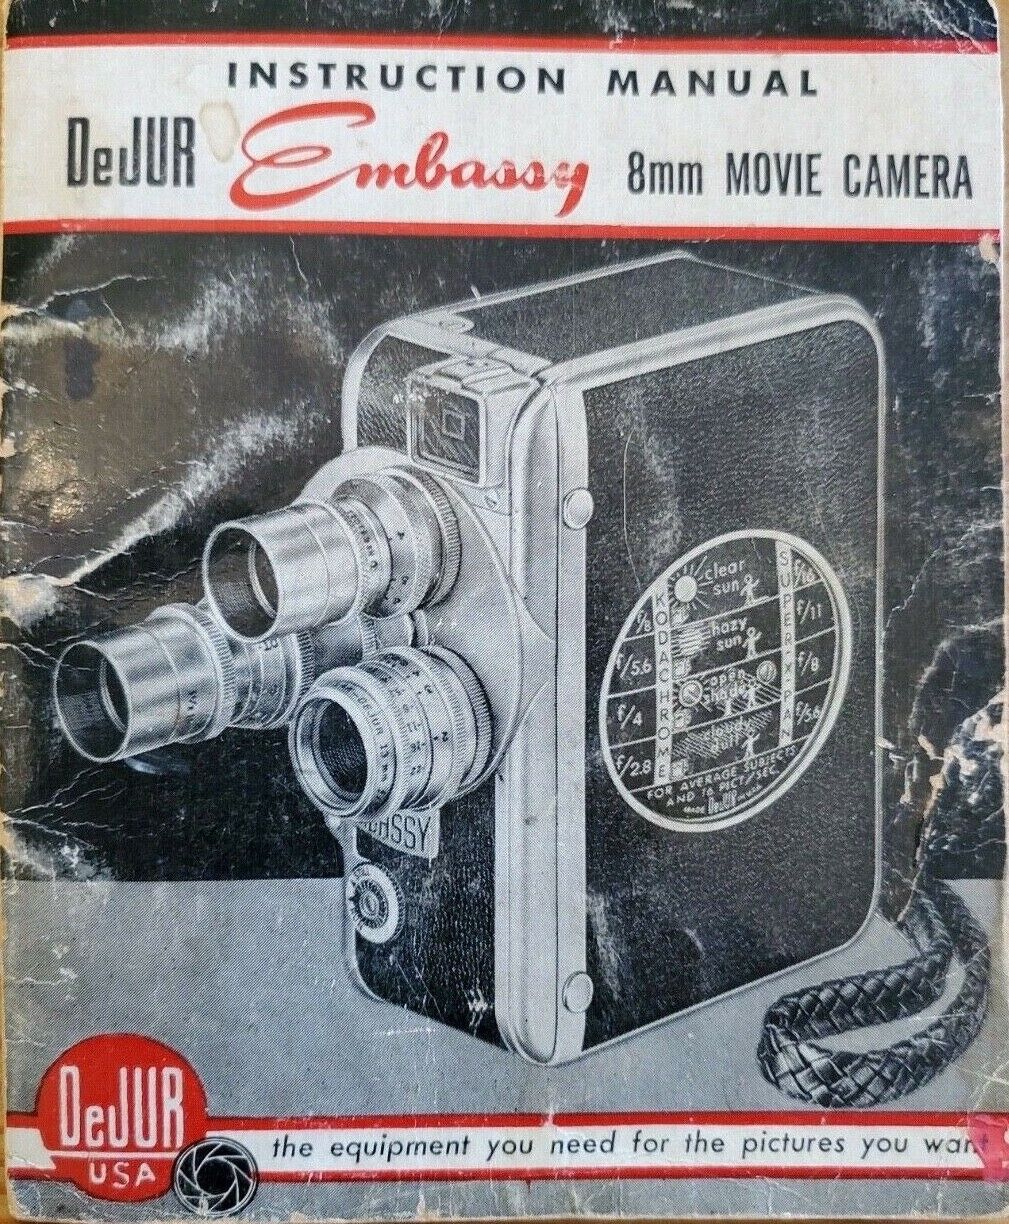 Movie Camera Manual DeJur Embassy 8mm 1950s VINTAGE 